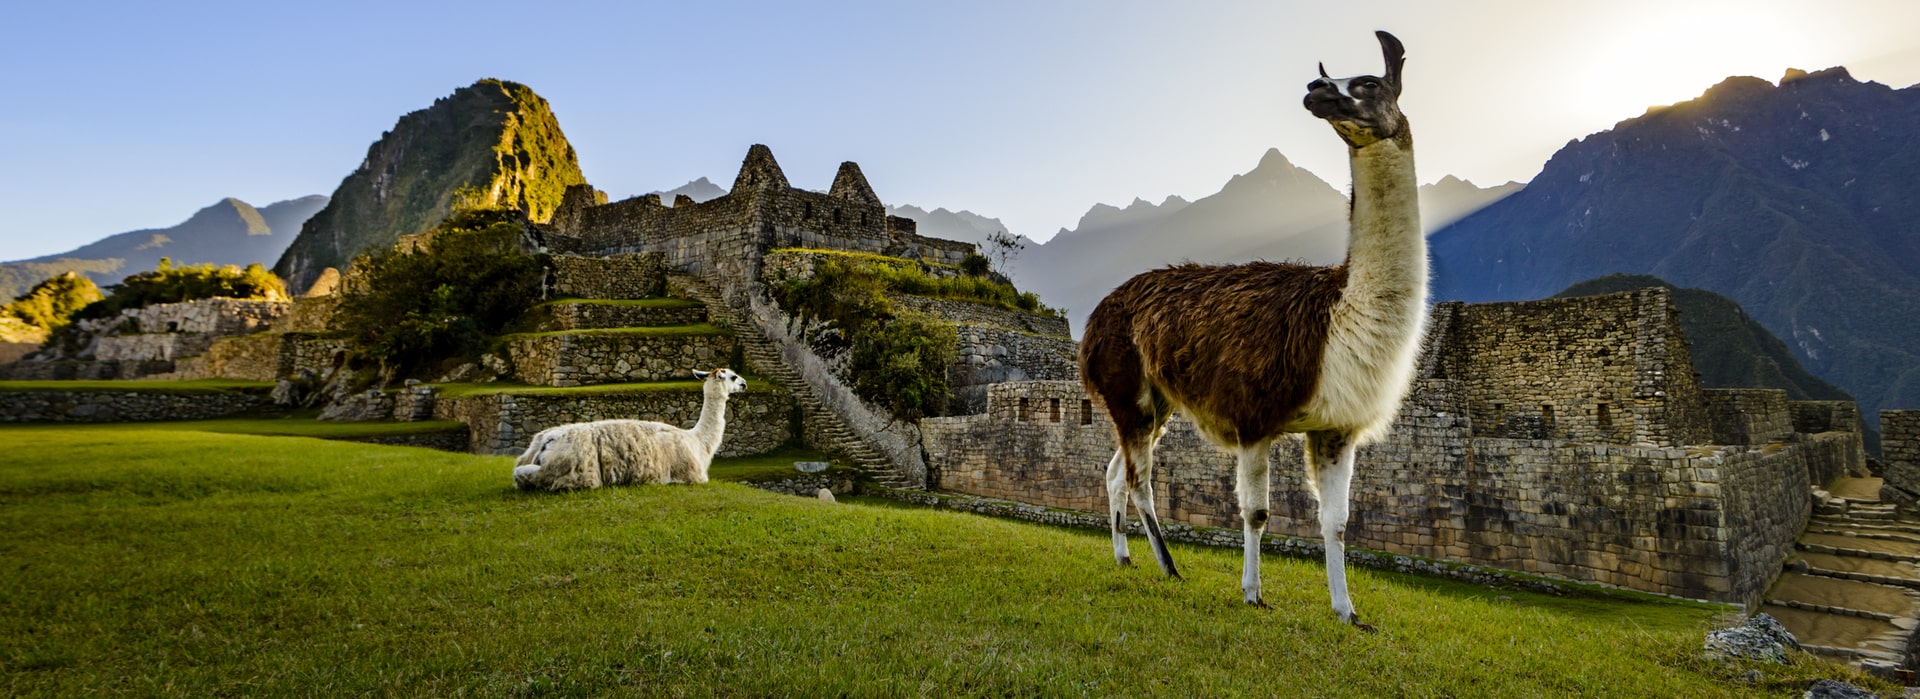 Llamas en Machu Picchu - Tour Maras Moray Machu Picchu